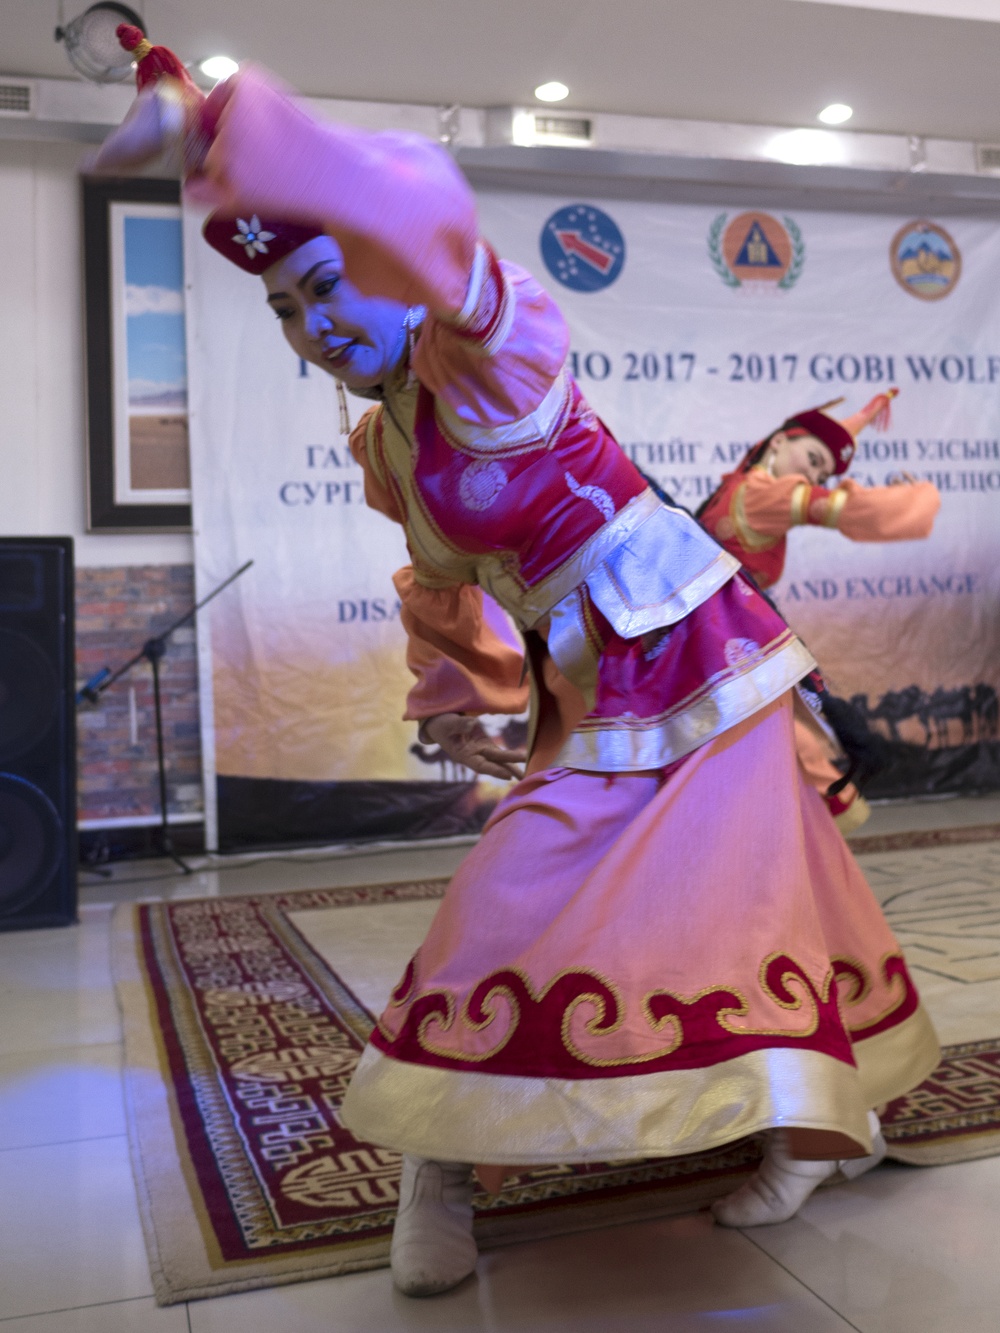 Gobi Wolf 2017 strengthens Mongolian partnerships